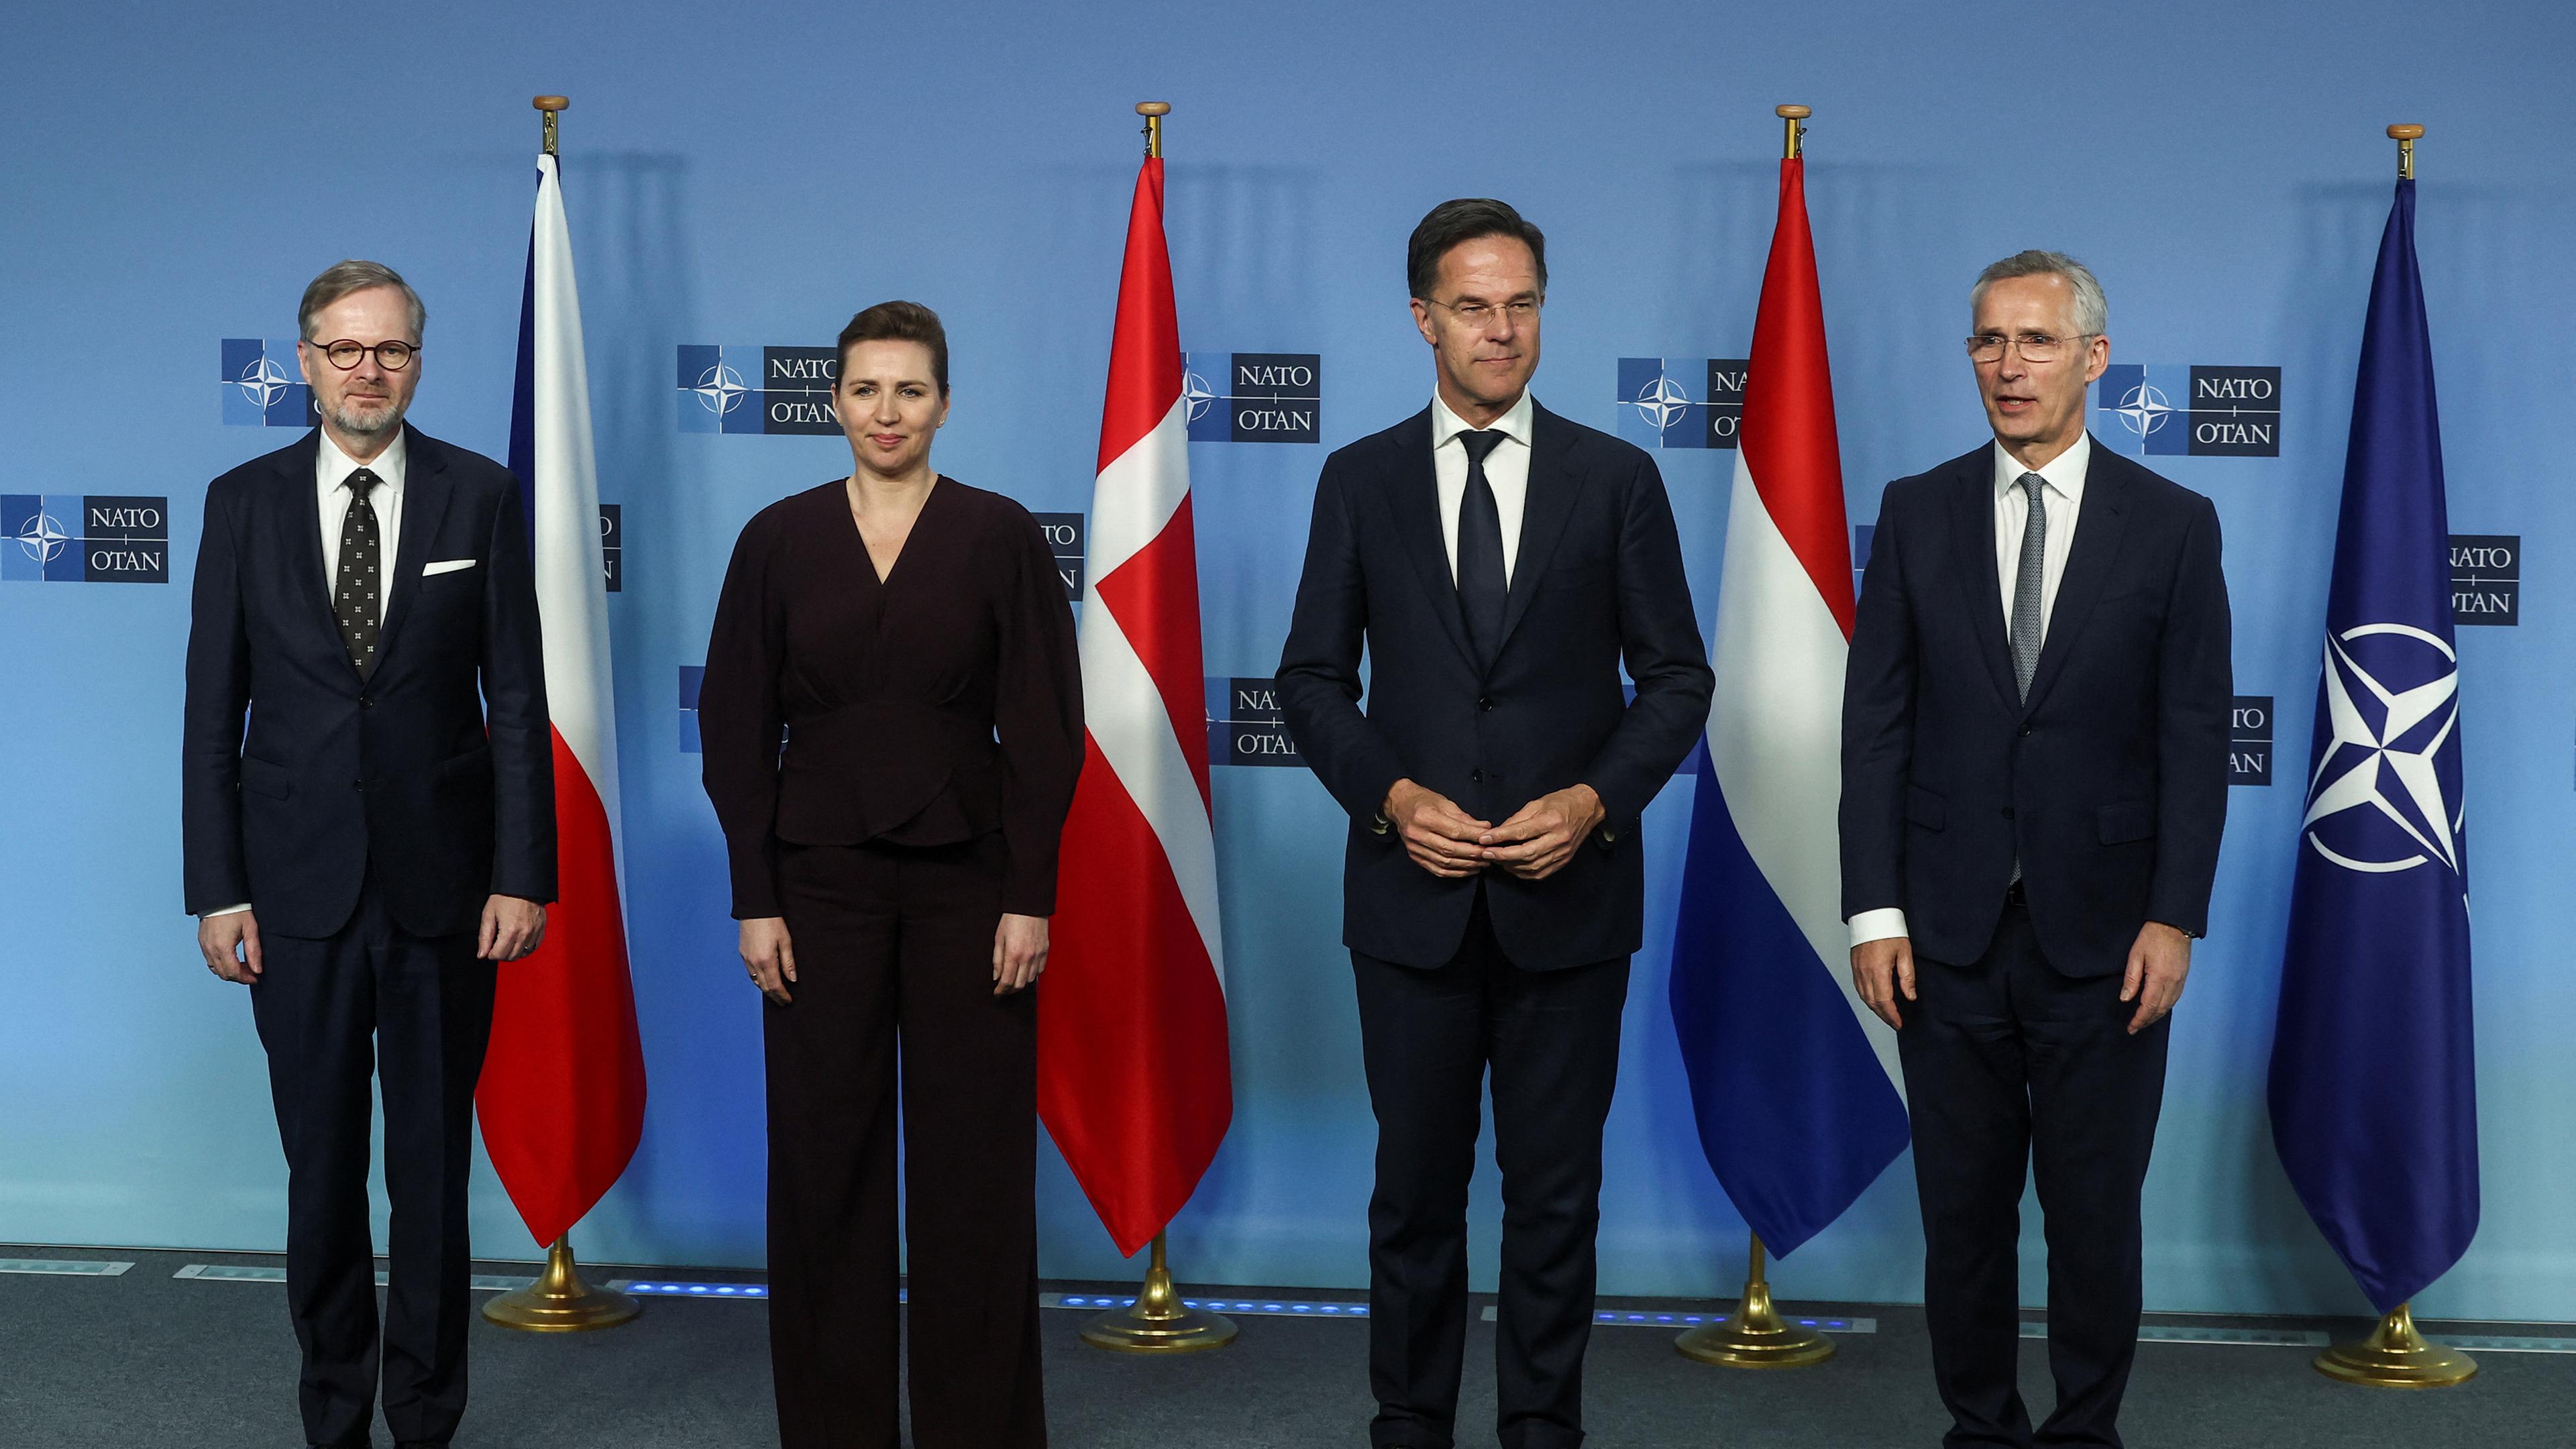 Czech Prime Minister Fiala, Danish Prime Minister Frederiksen, Dutch Prime Minister Rutte and NATO Secretary-General Stoltenberg